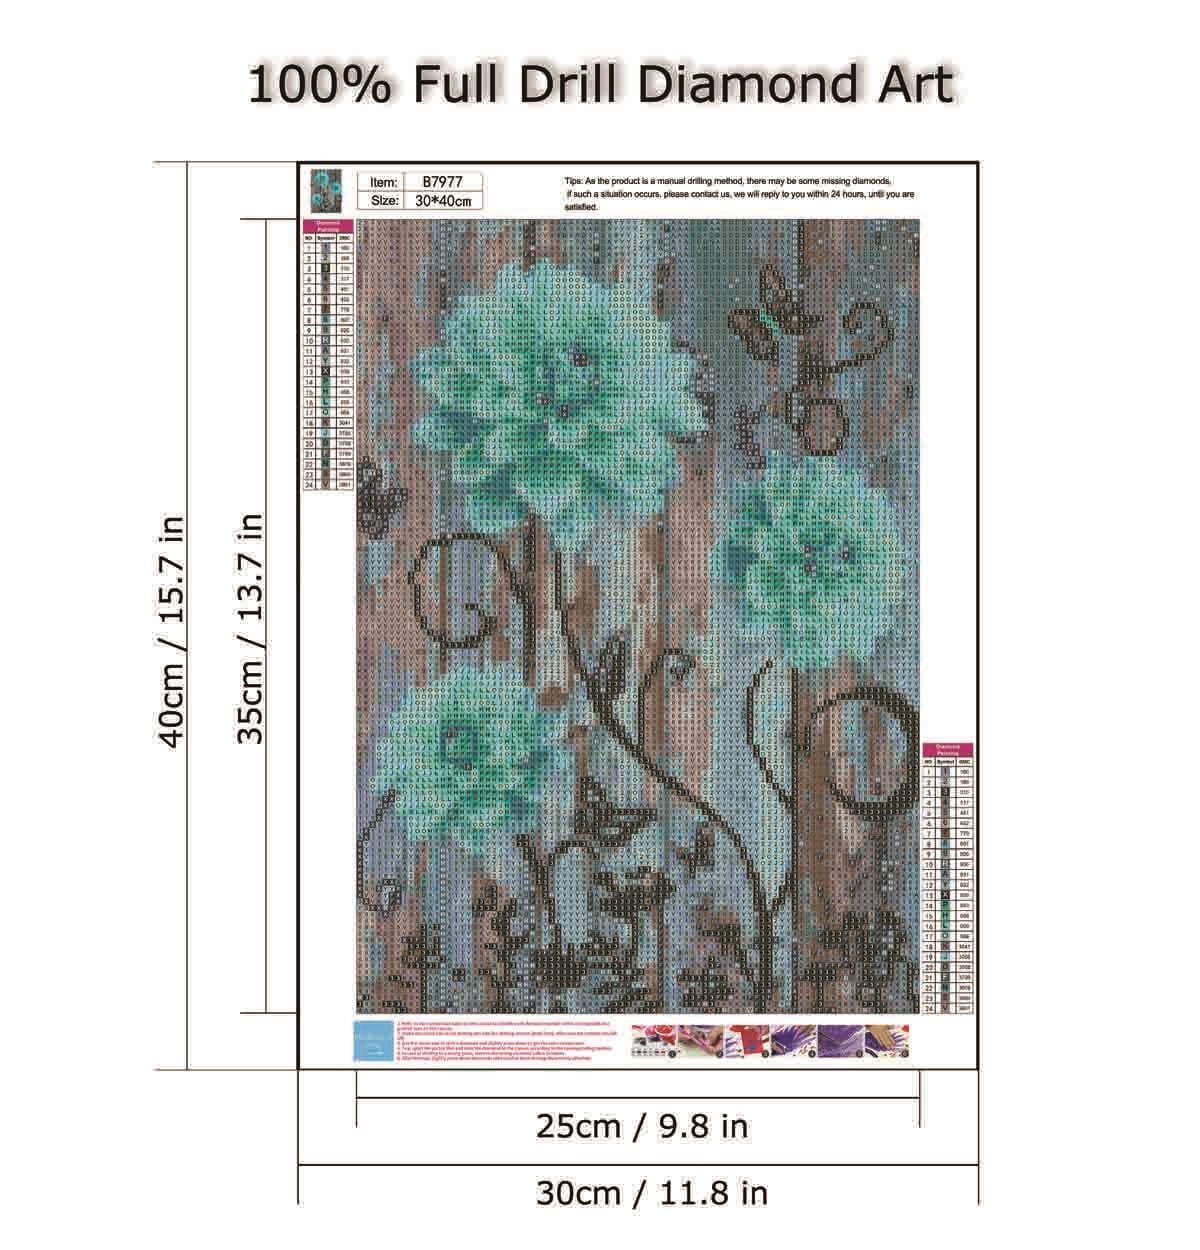 Shop Rustic Flower Diamond Art Painting Kits at Artsy Sister.